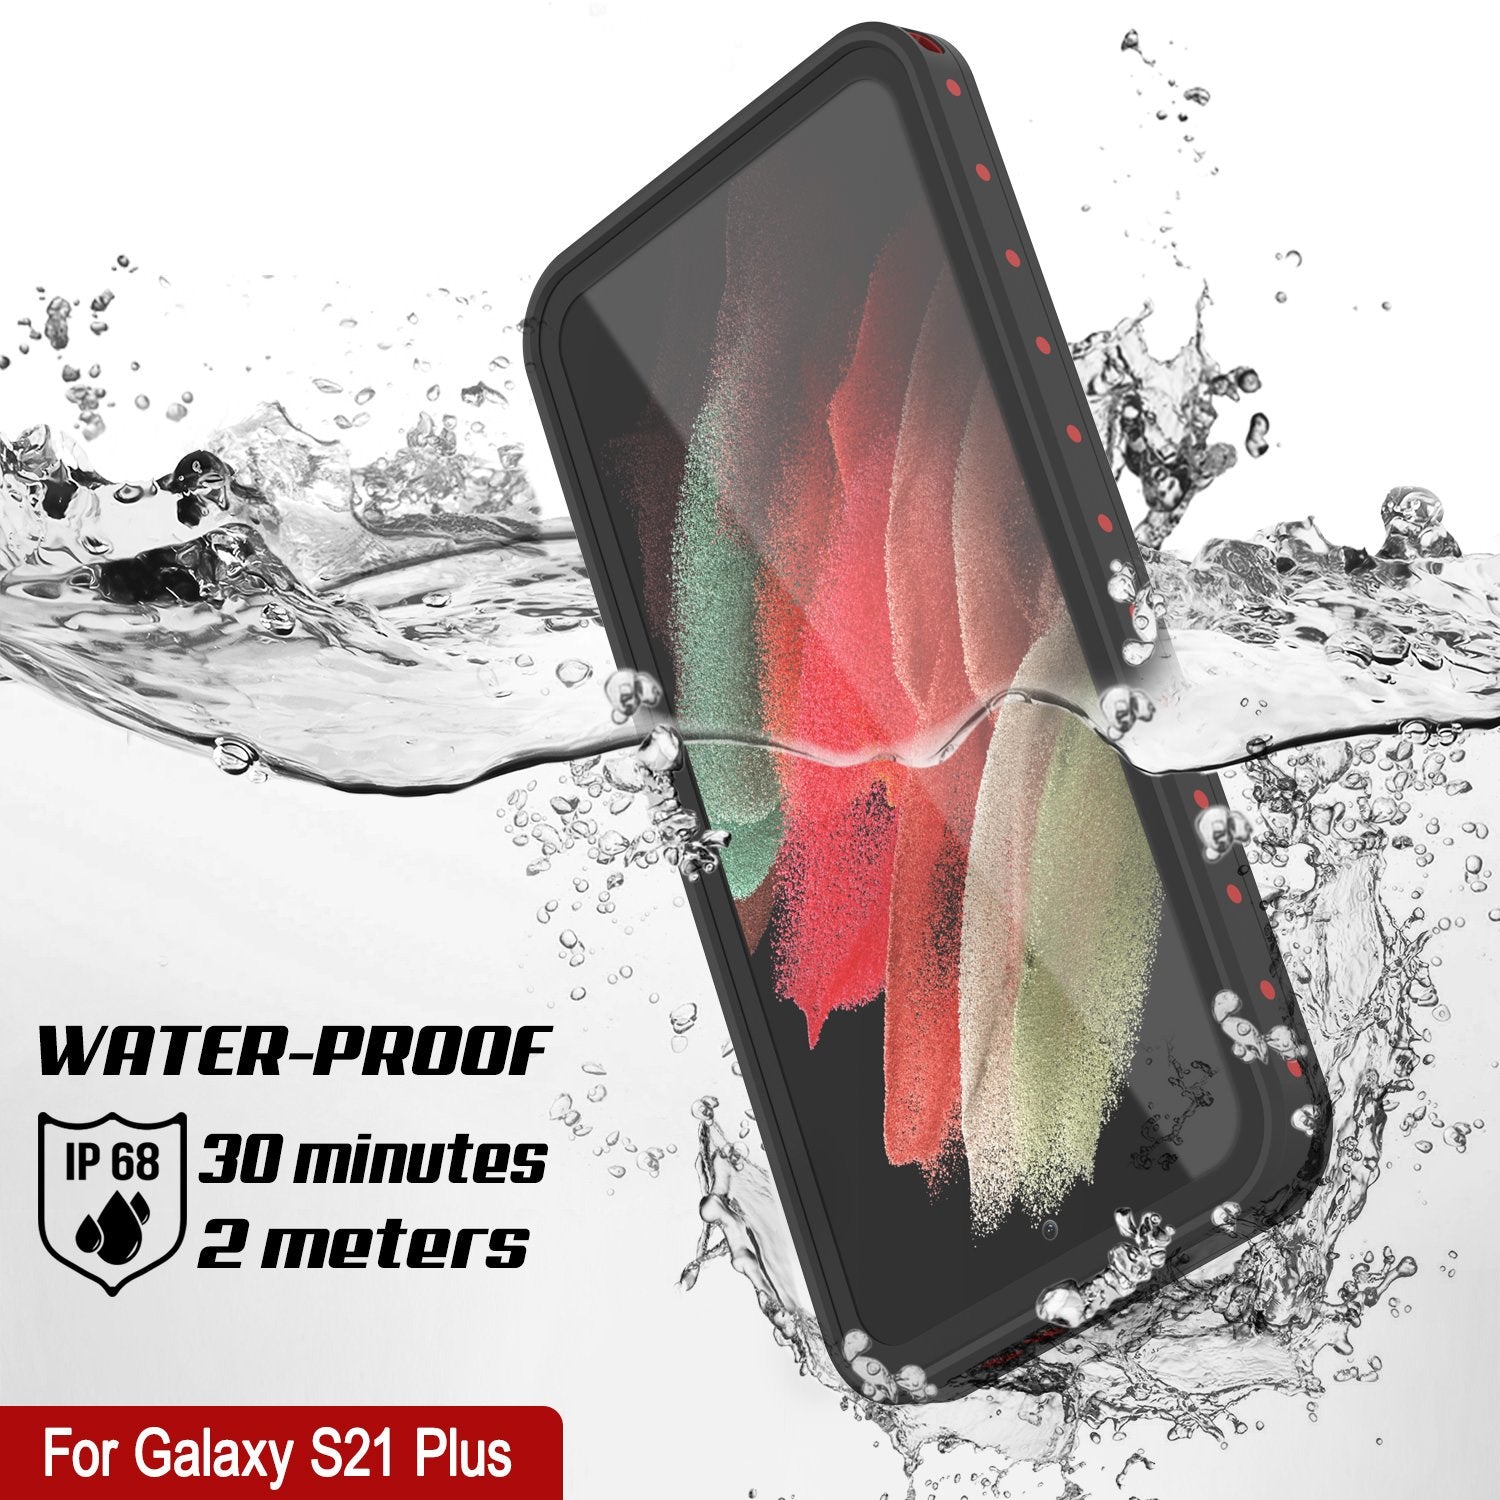 Galaxy S21+ Plus Waterproof Case PunkCase StudStar Red Thin 6.6ft Underwater IP68 Shock/Snow Proof